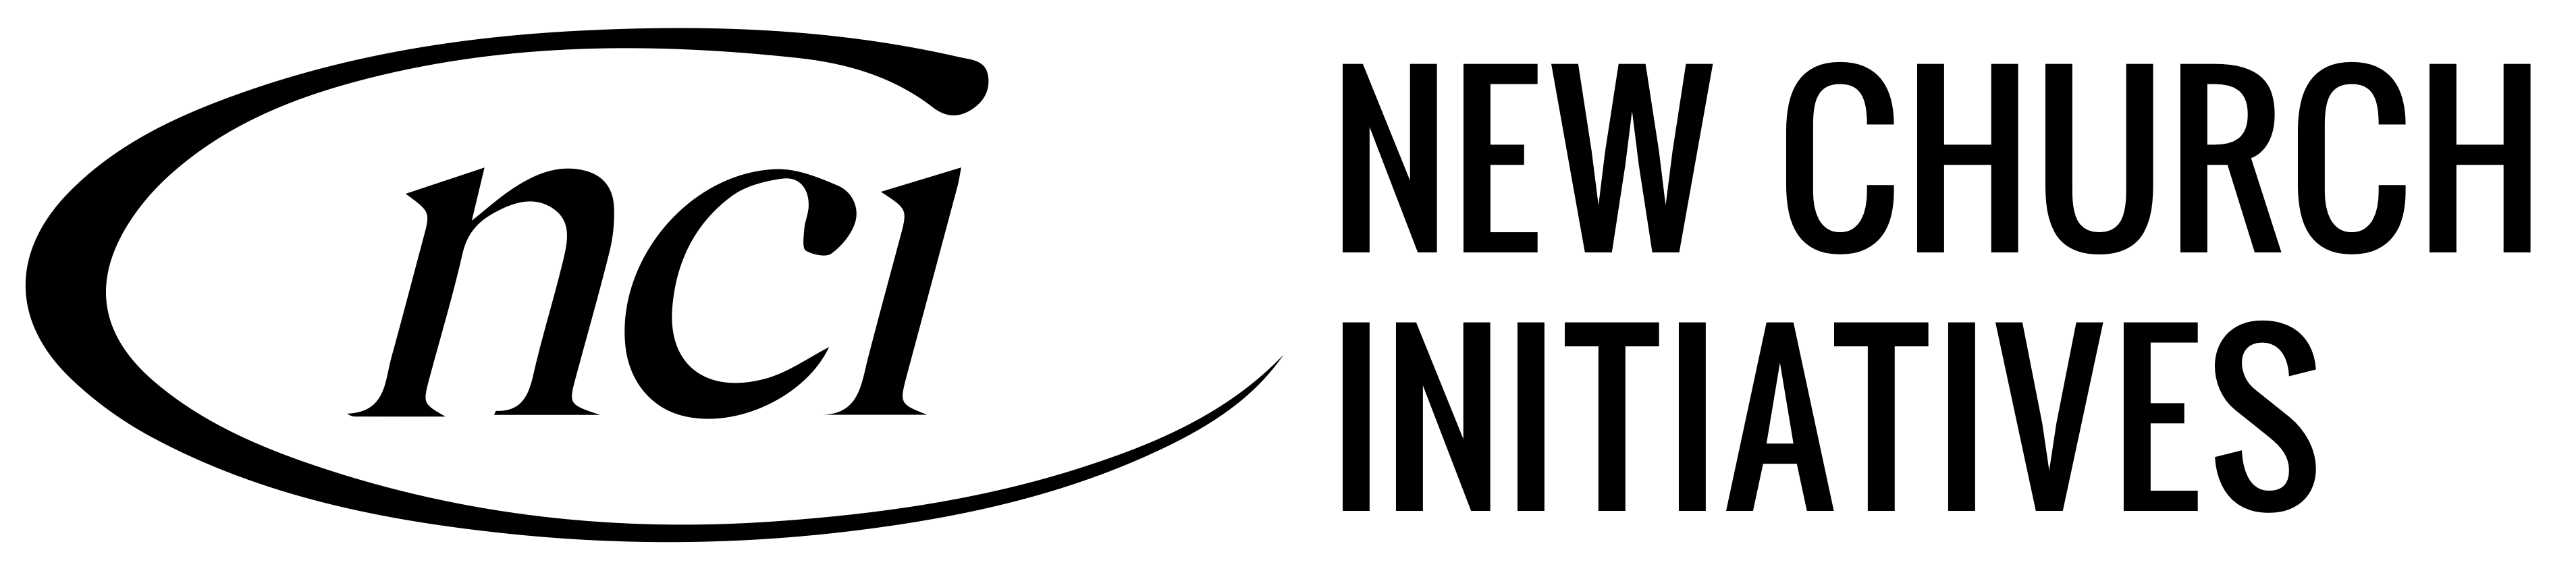 New Church Initiatives logo